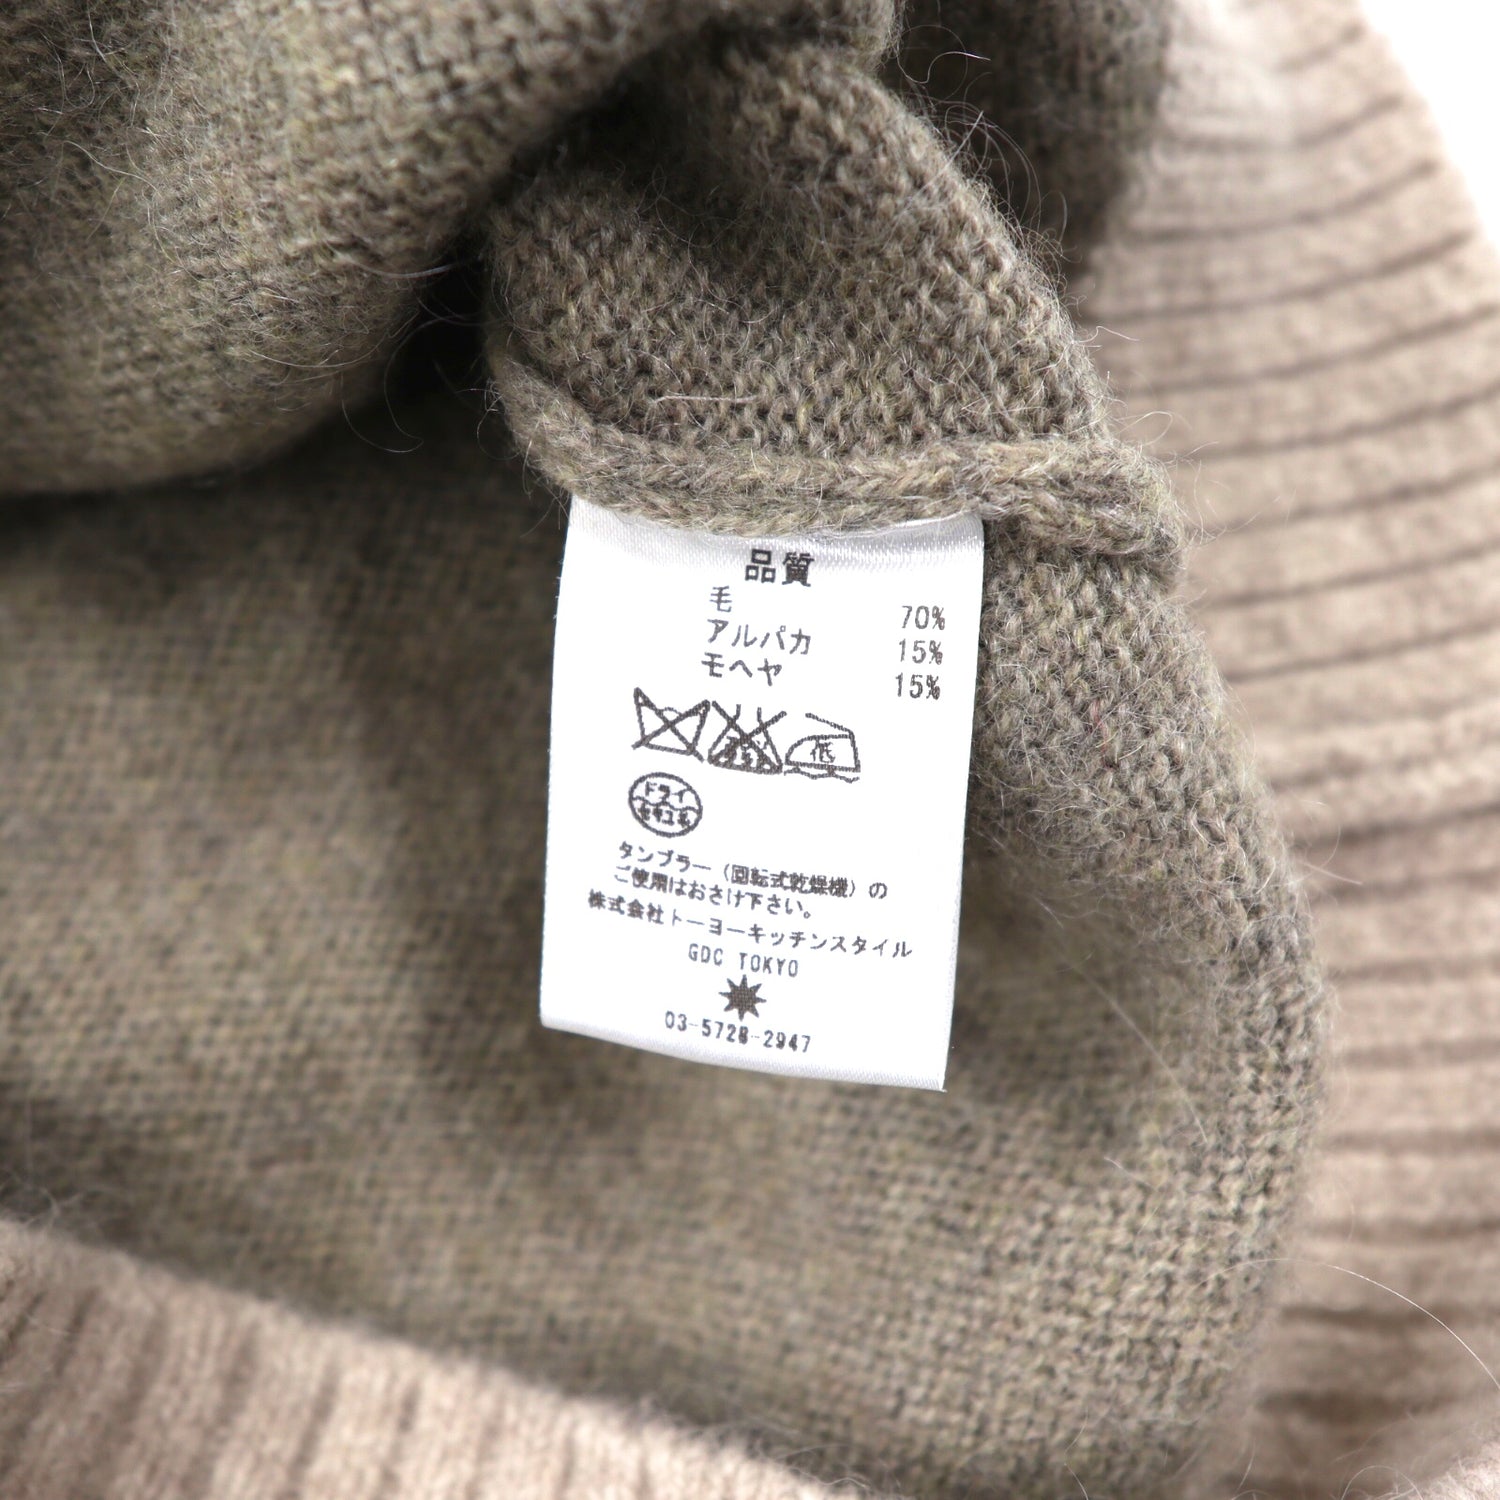 GDC Sweater M Brown Wool MITSUKE KNIT – 日本然リトテ